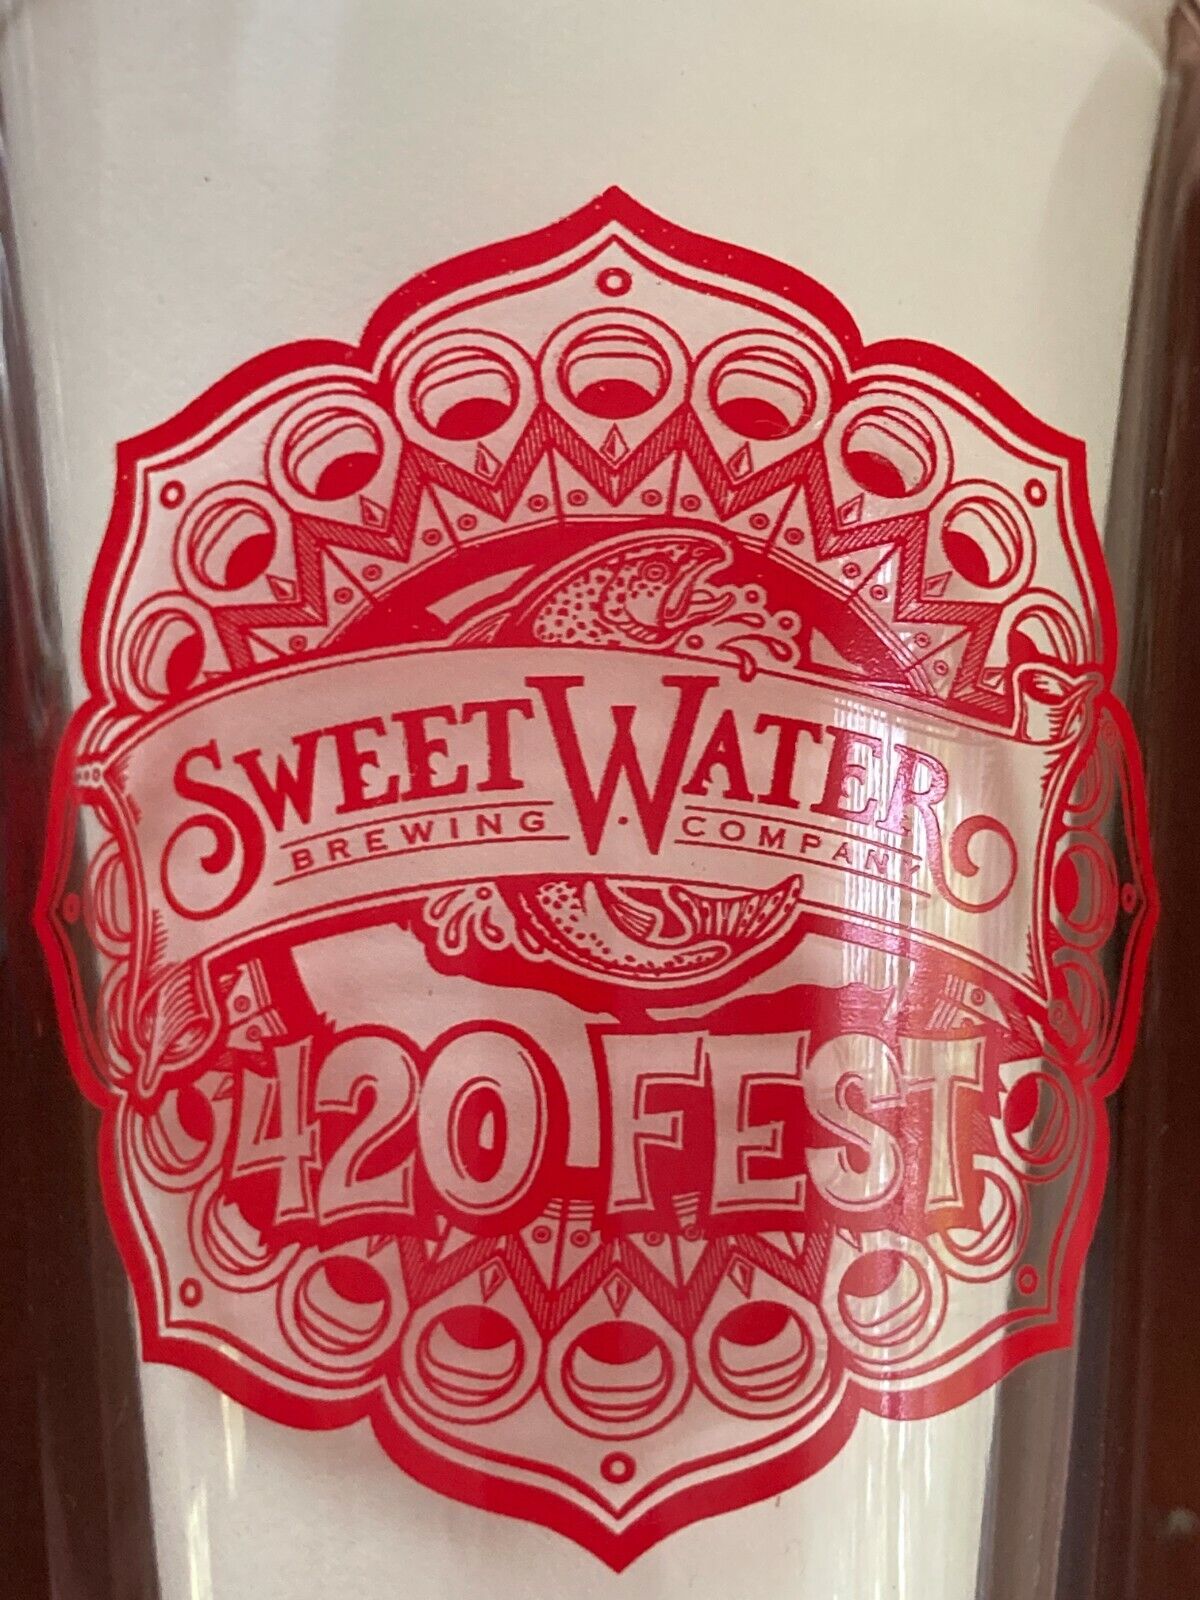 Sweet Water Brewing Company 420 Fest Pint Glasses Set Lot of 9 Red Graphics Sweet Water Brewing Company - фотография #8